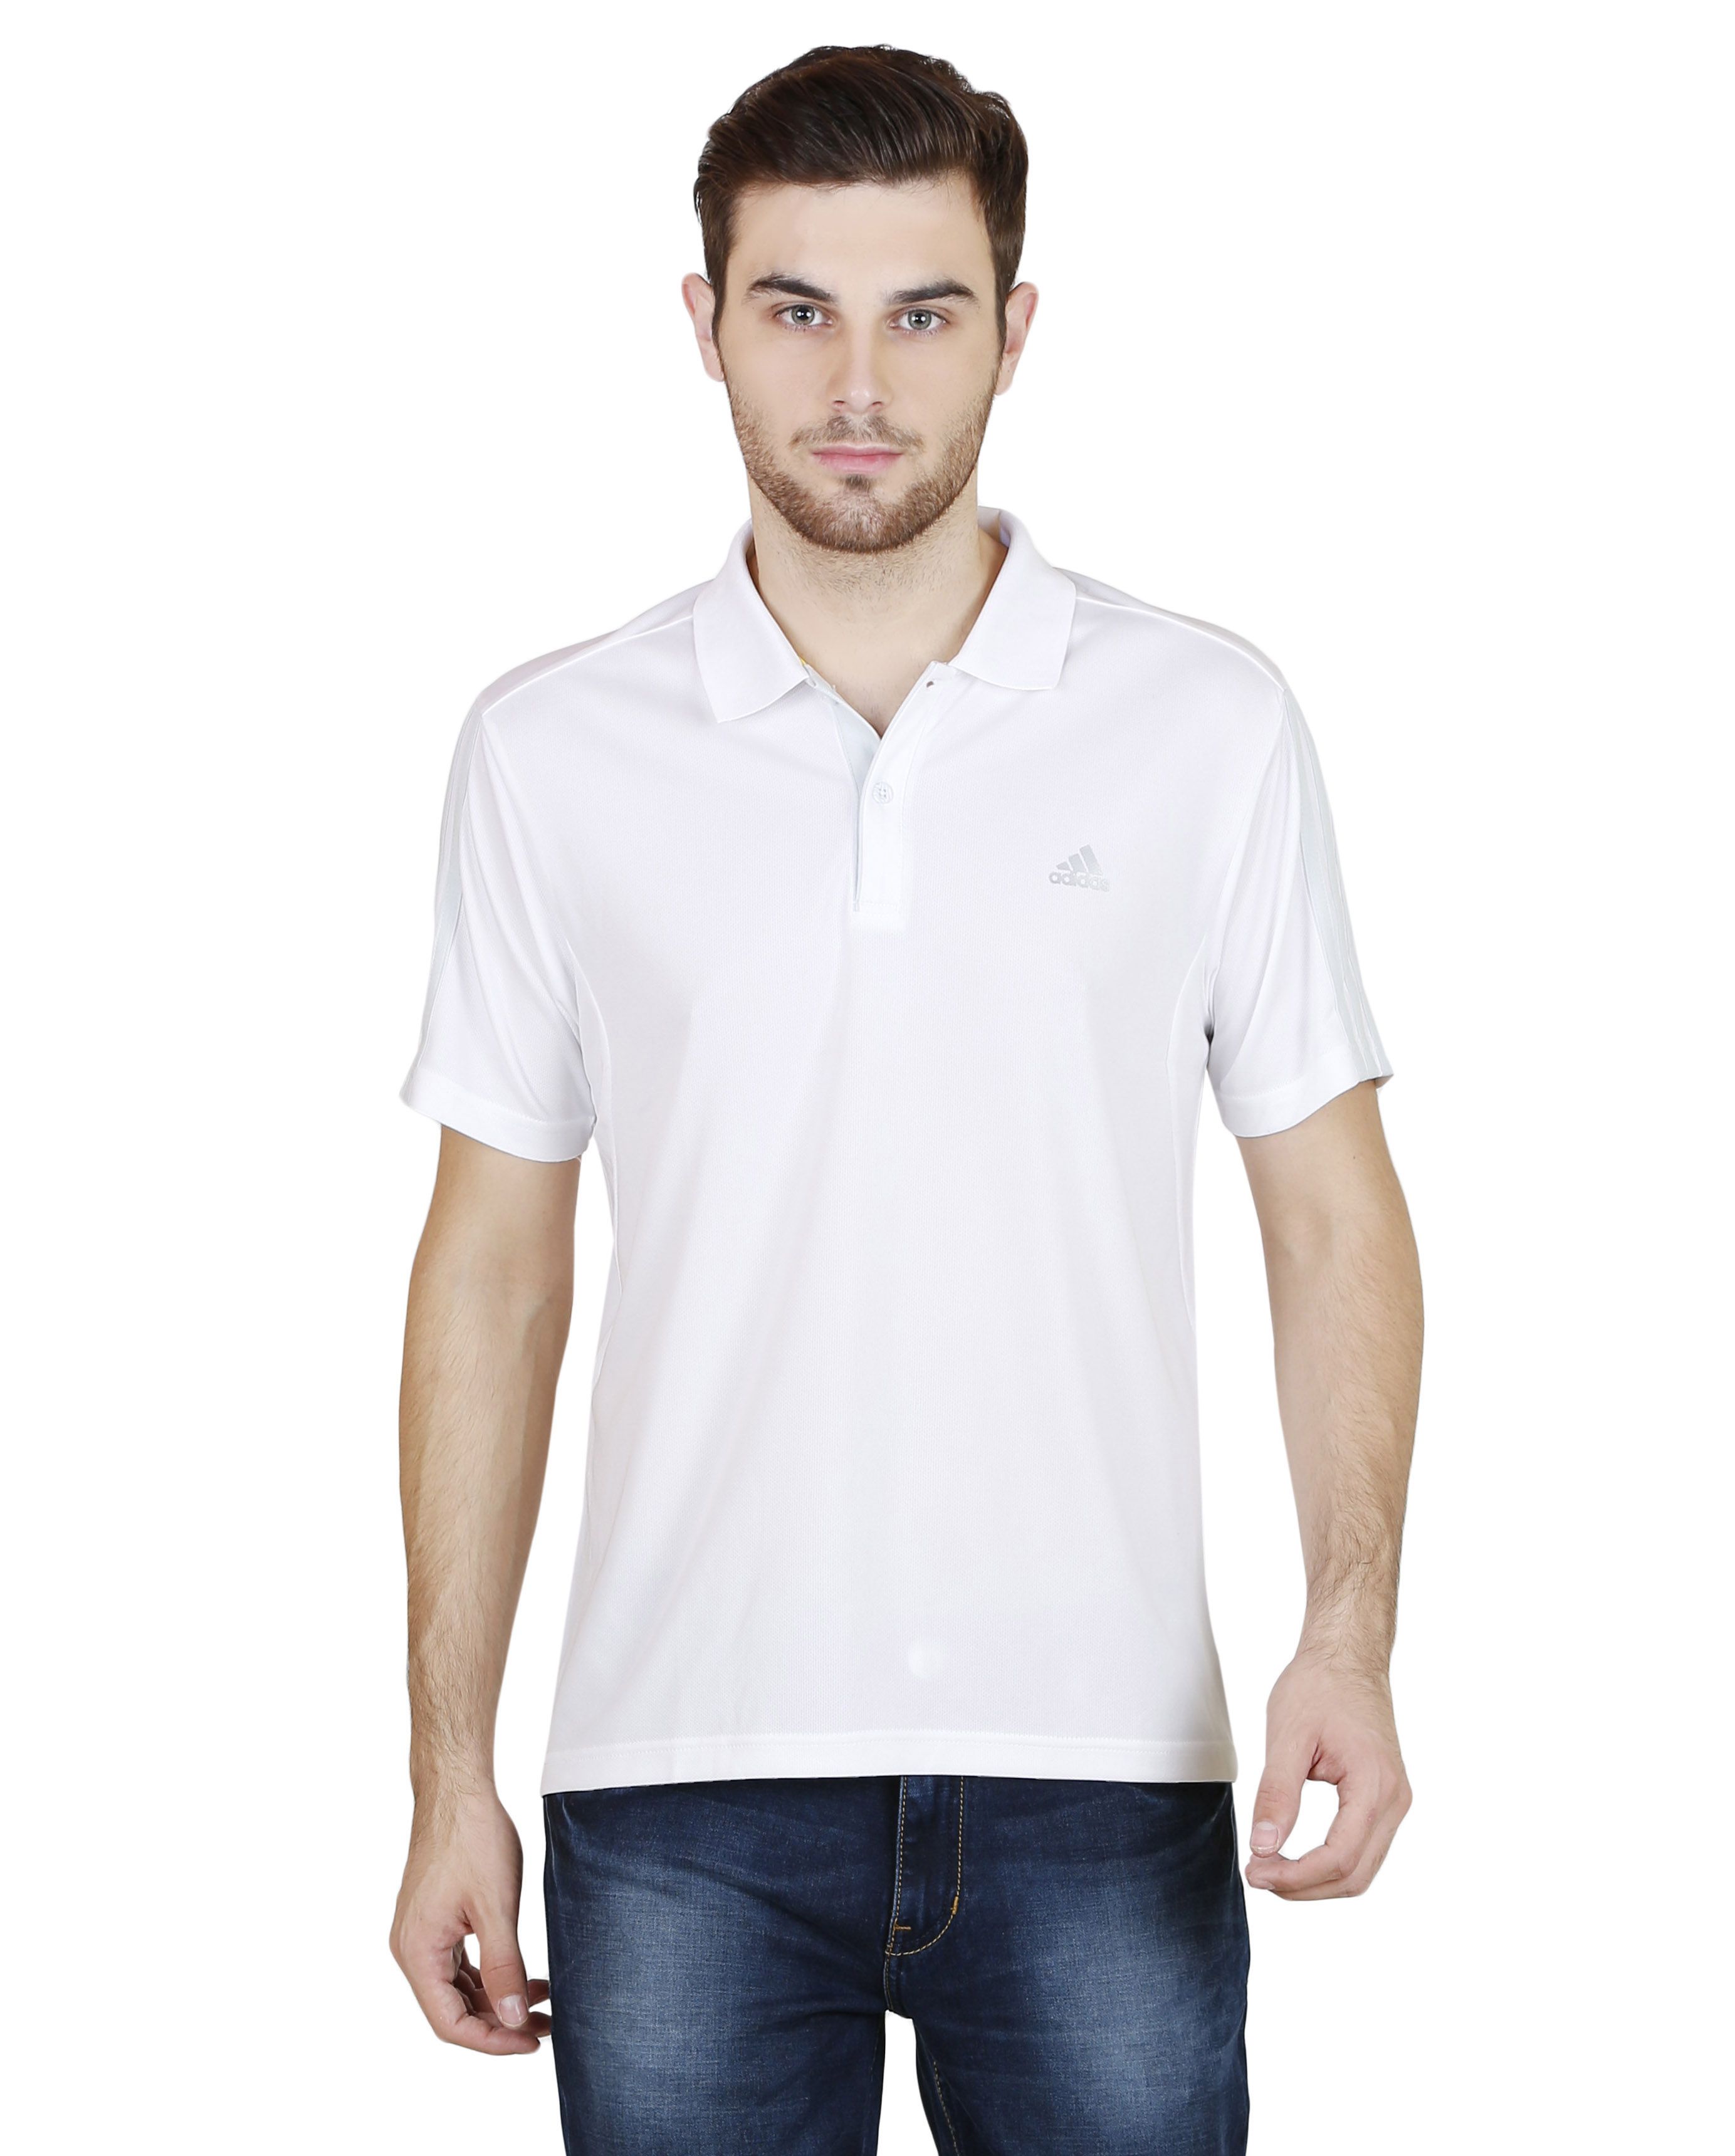 Adidas White Polo T Shirts - Buy Adidas White Polo T Shirts Online at ...